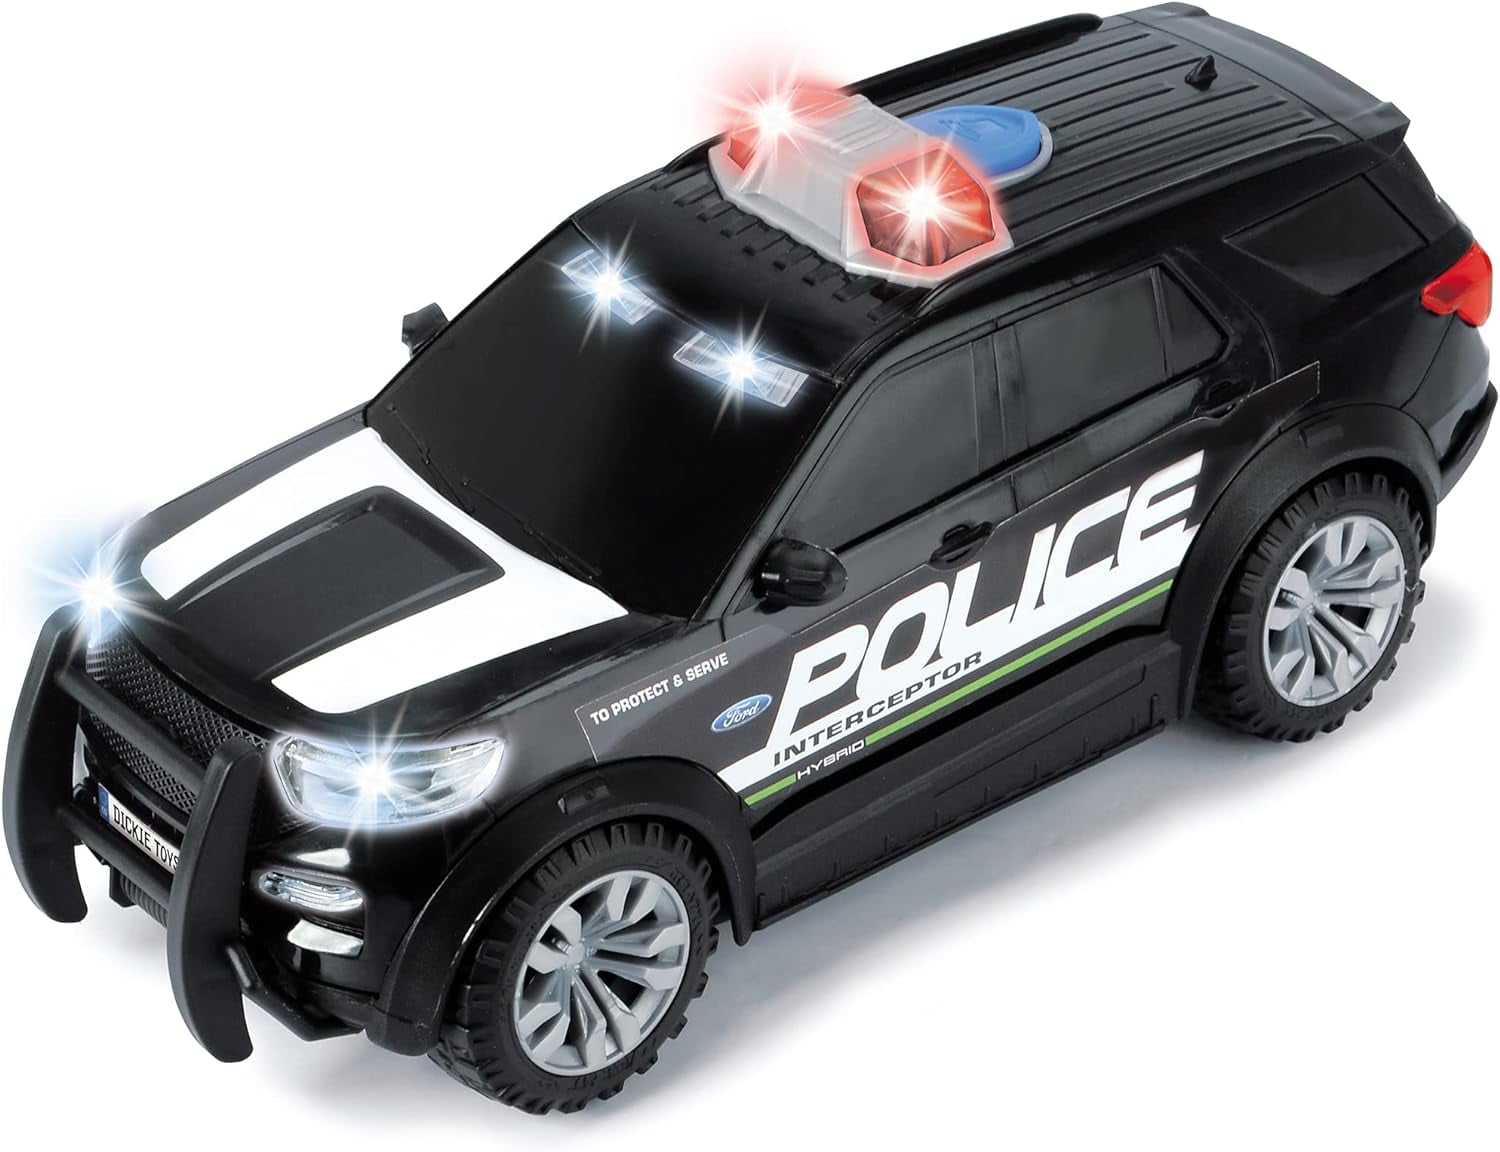 Dickie Toys Intercepteur de police Ford 27 Cm